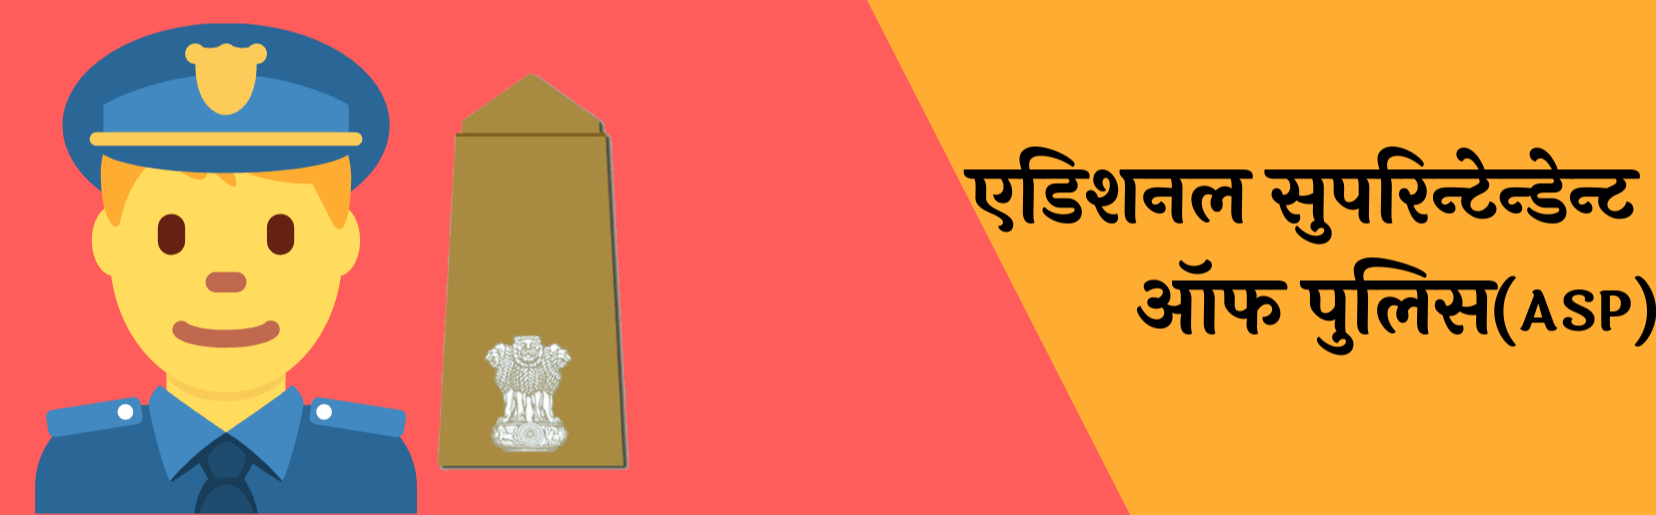 ASP rank list in hindi